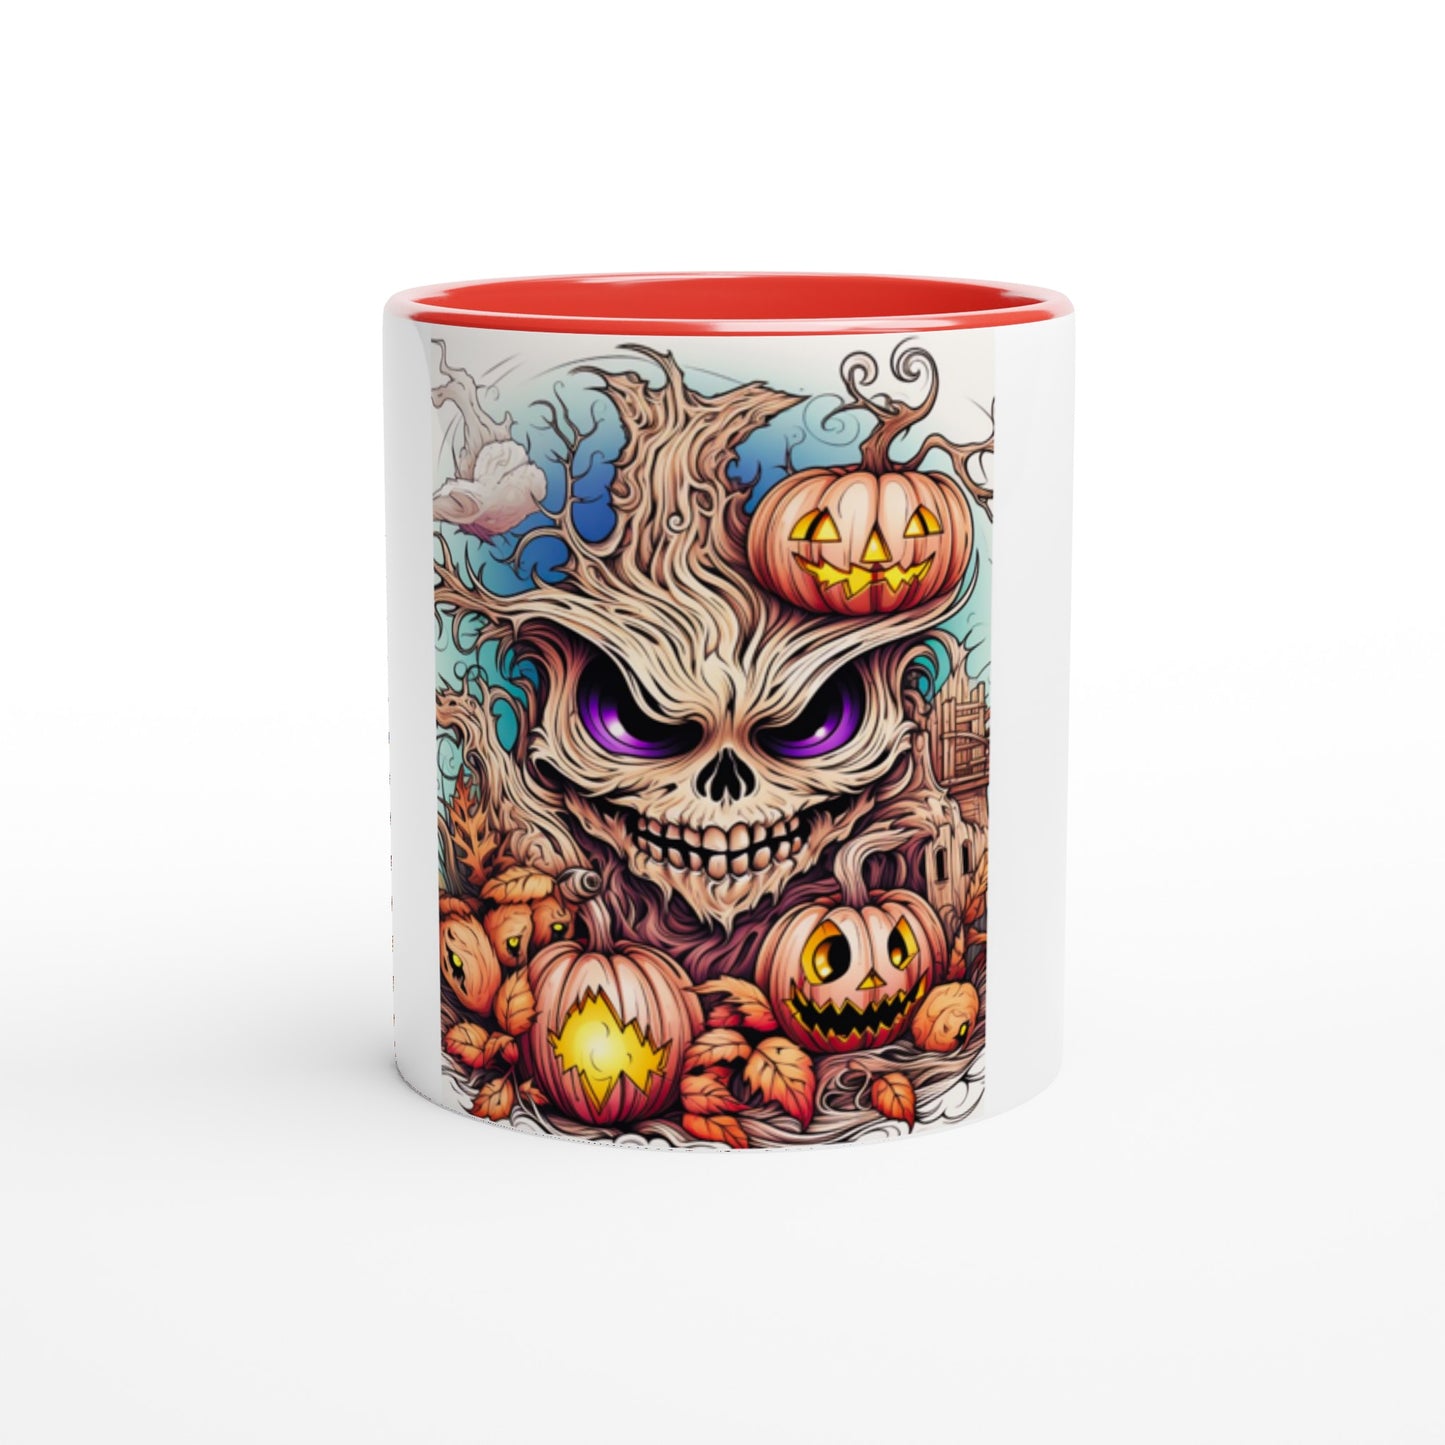 Skull tree and Pumpkins| Mug | Dishwasher and Microwave safe